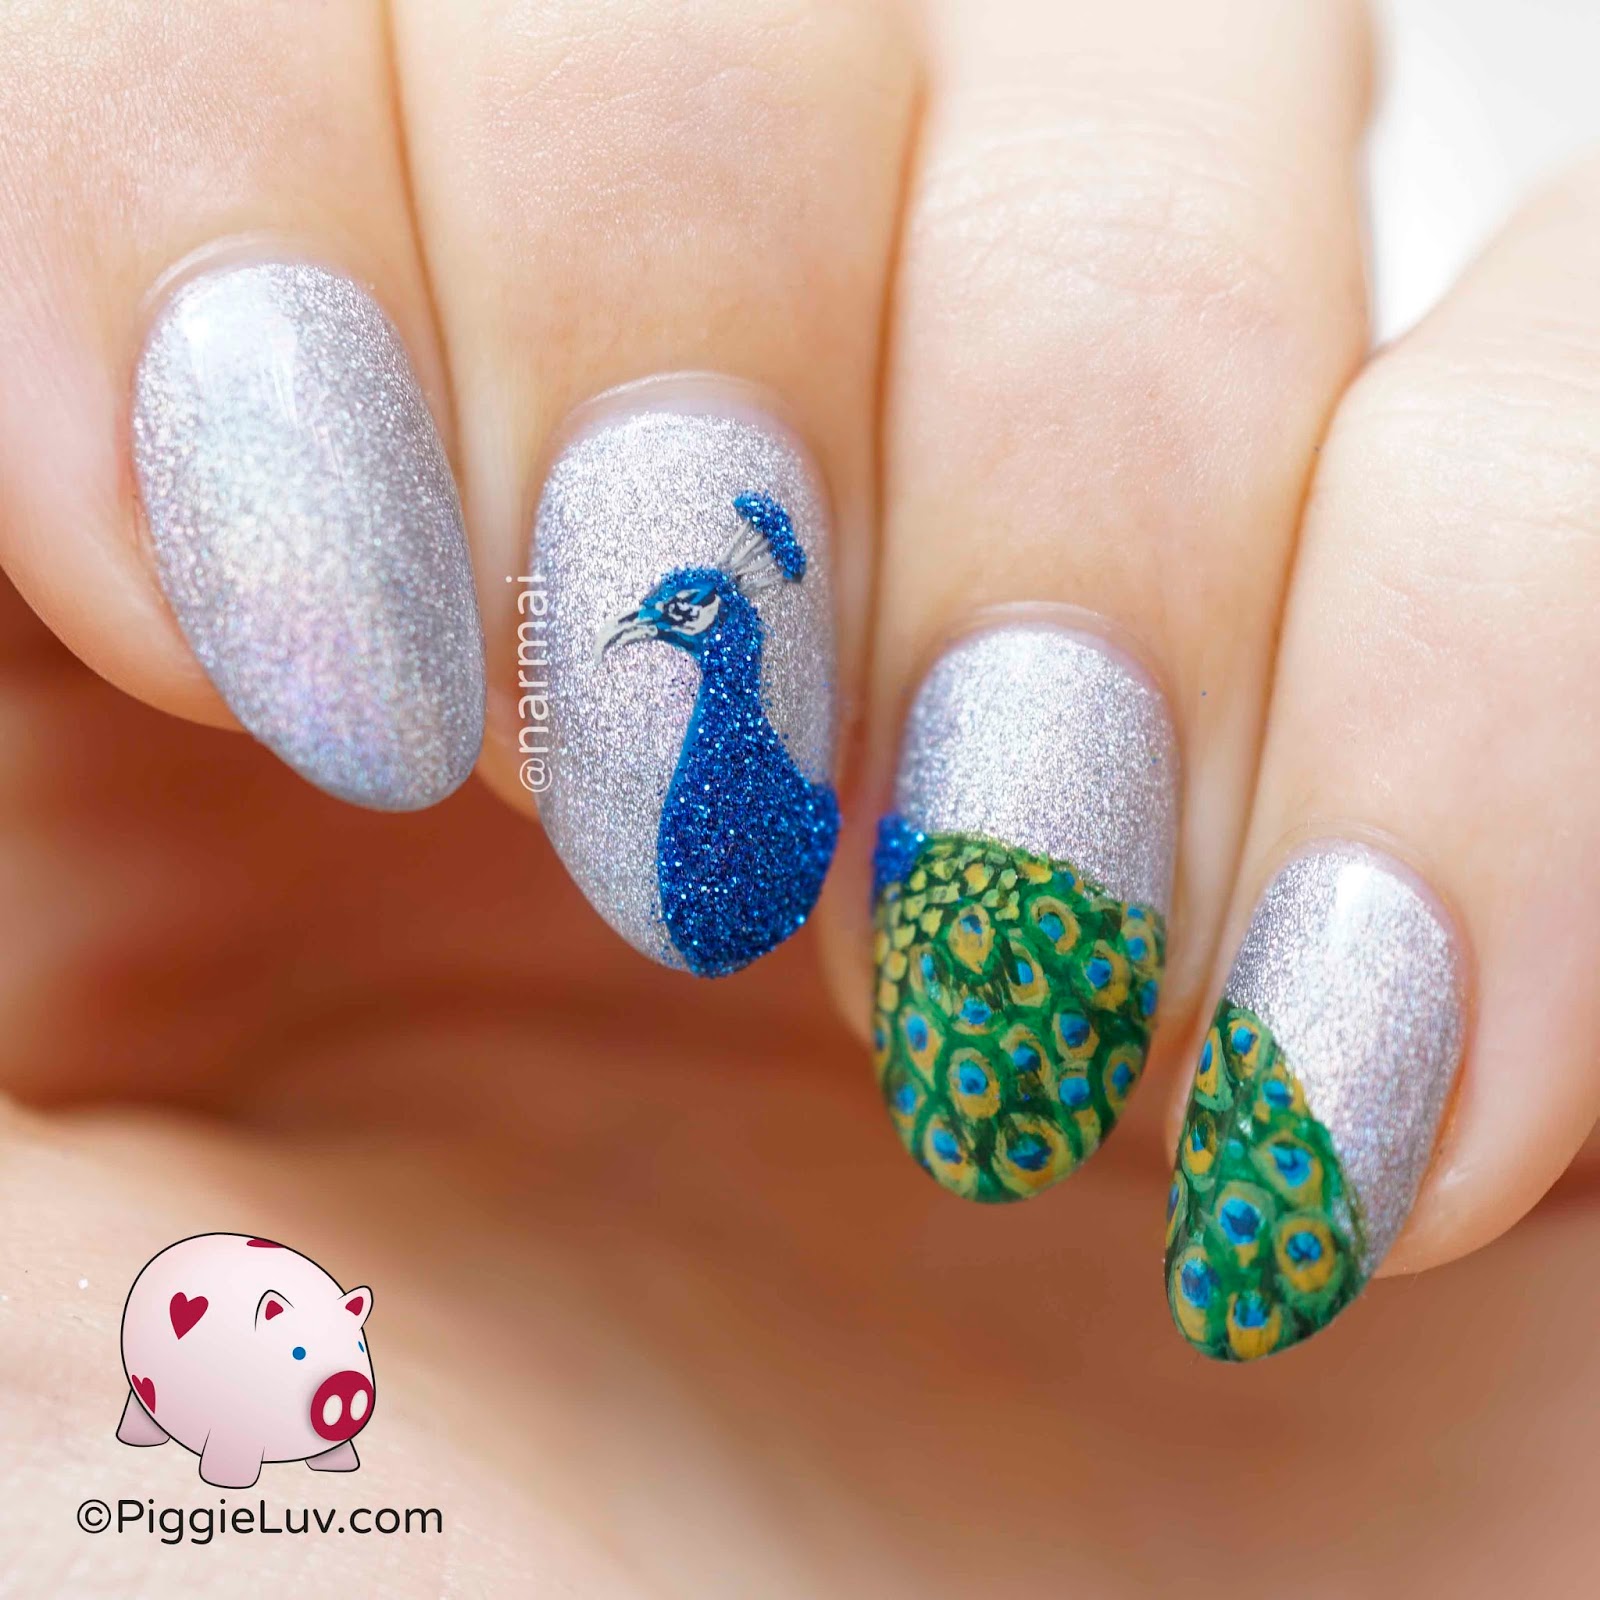 Peacock Nails by @NailDecor - SoNailicious